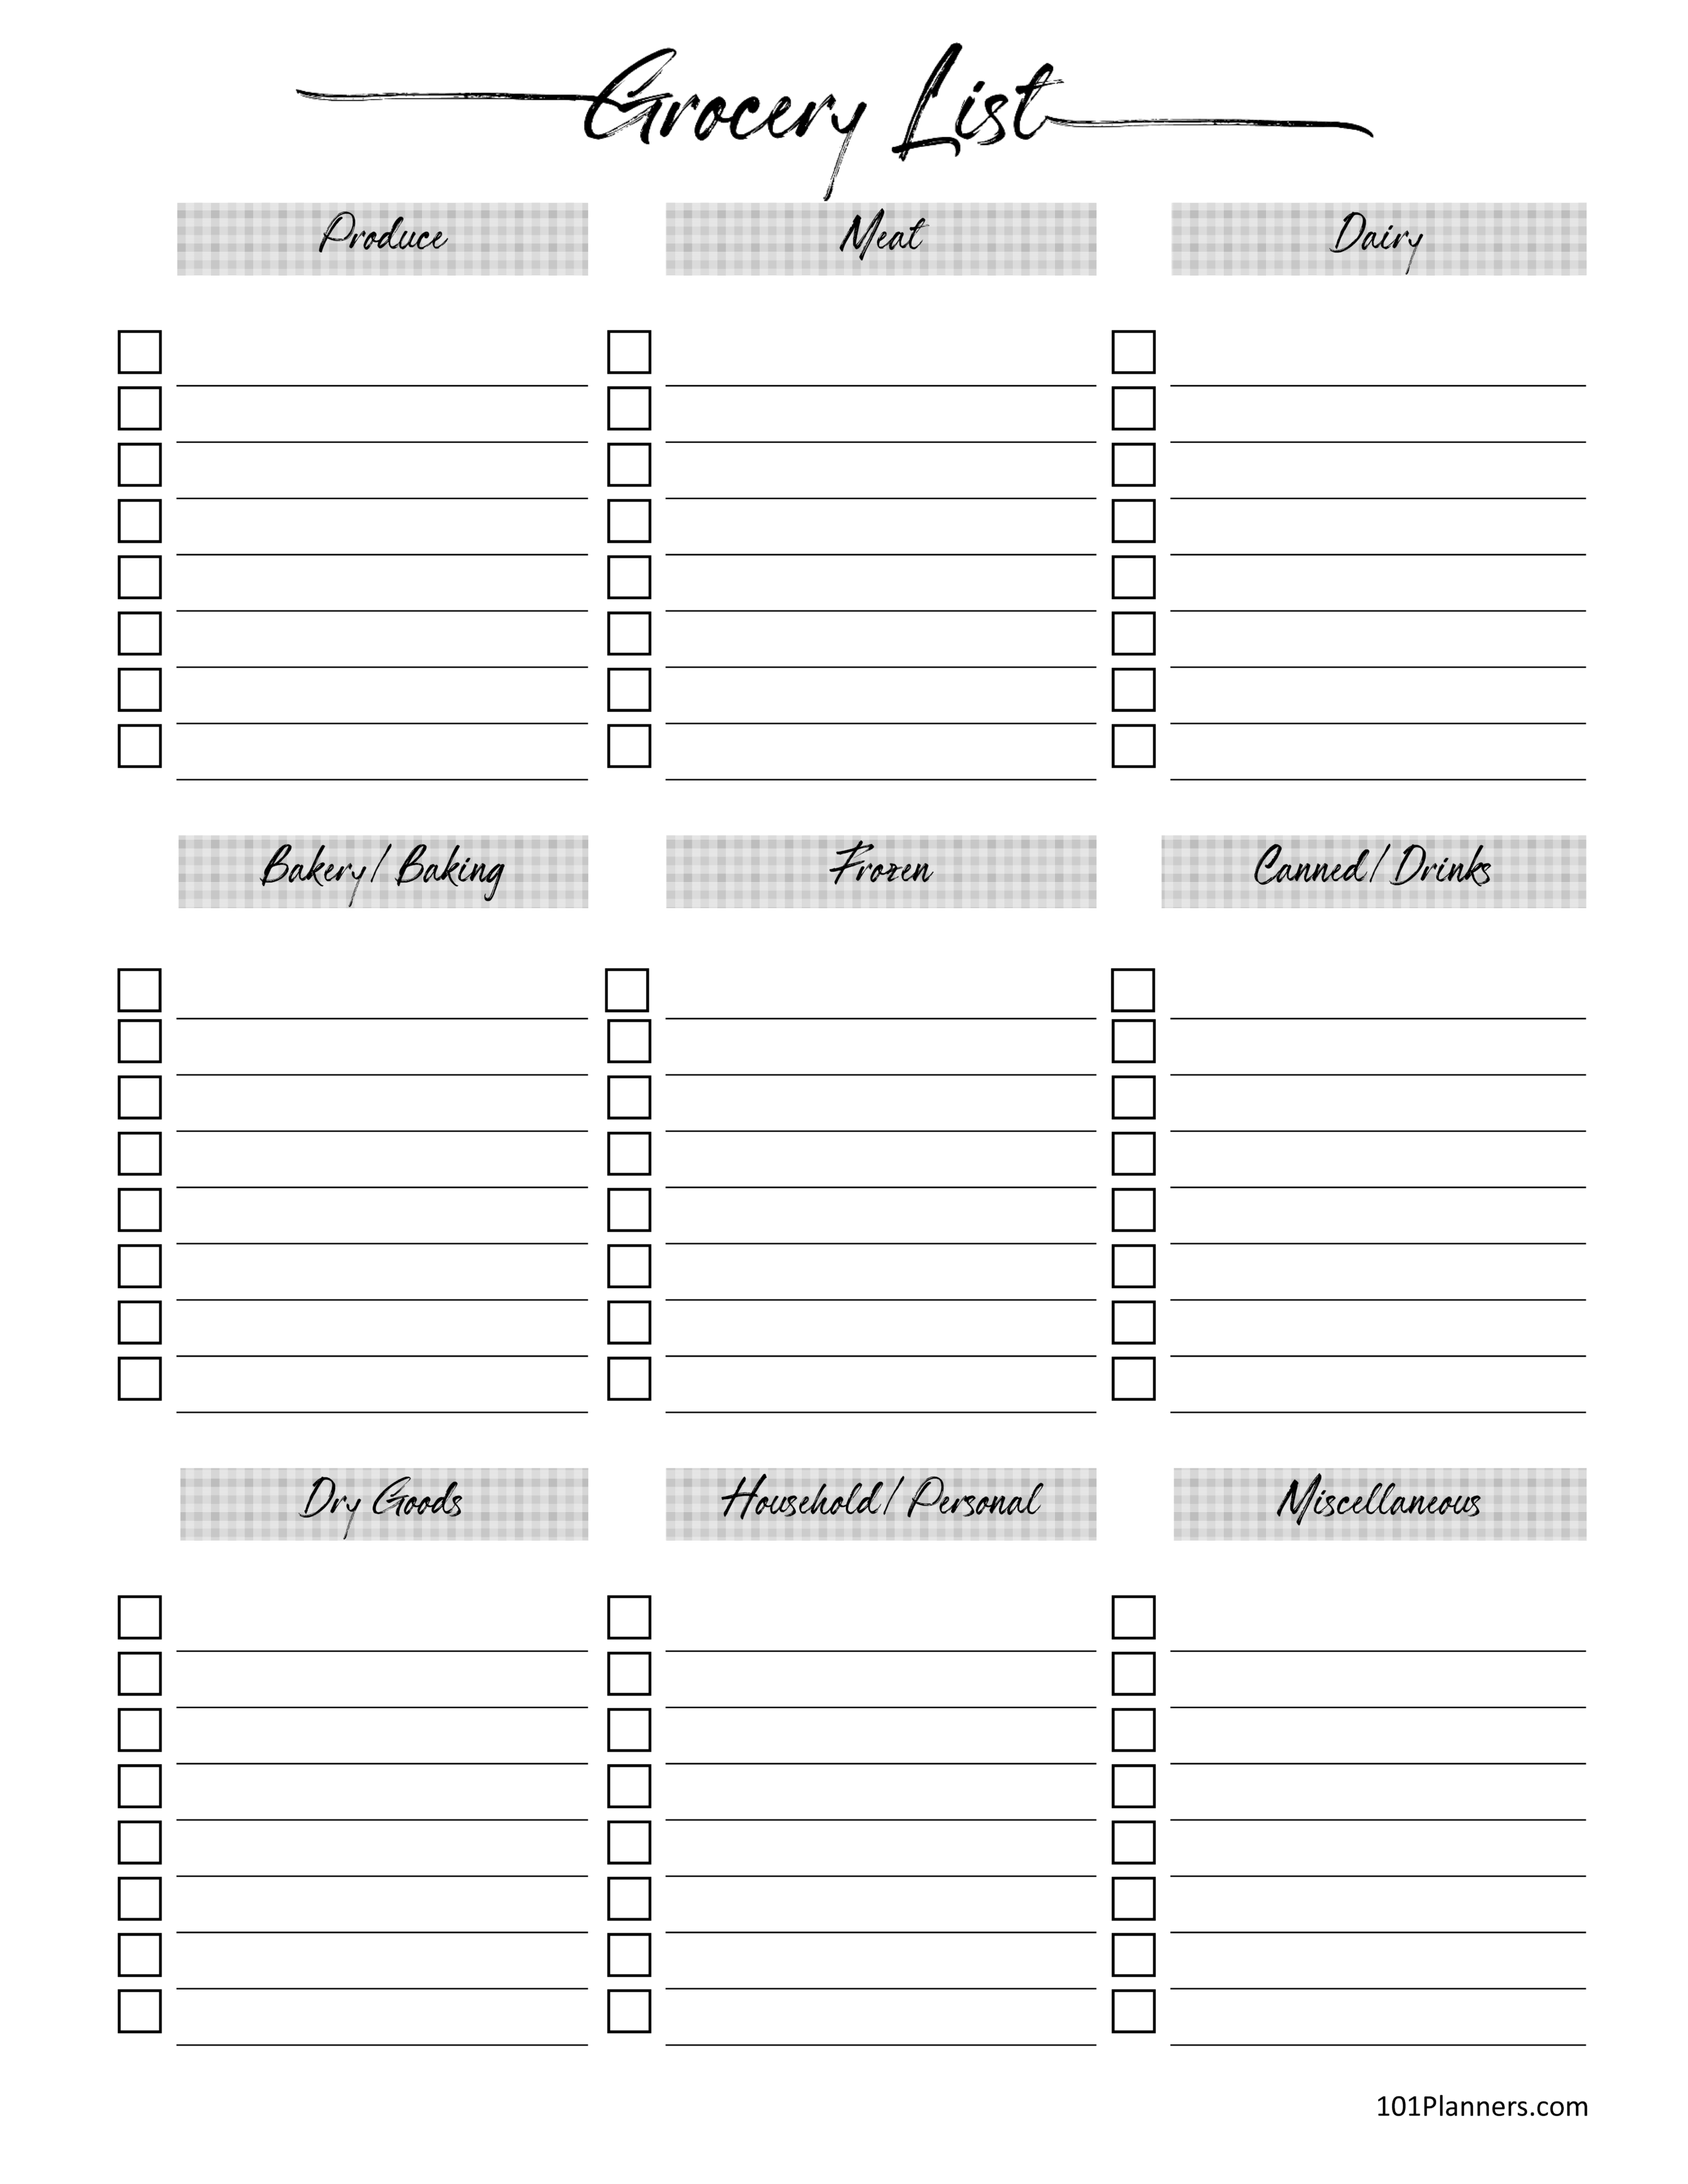 Grocery List Template | Free Printable